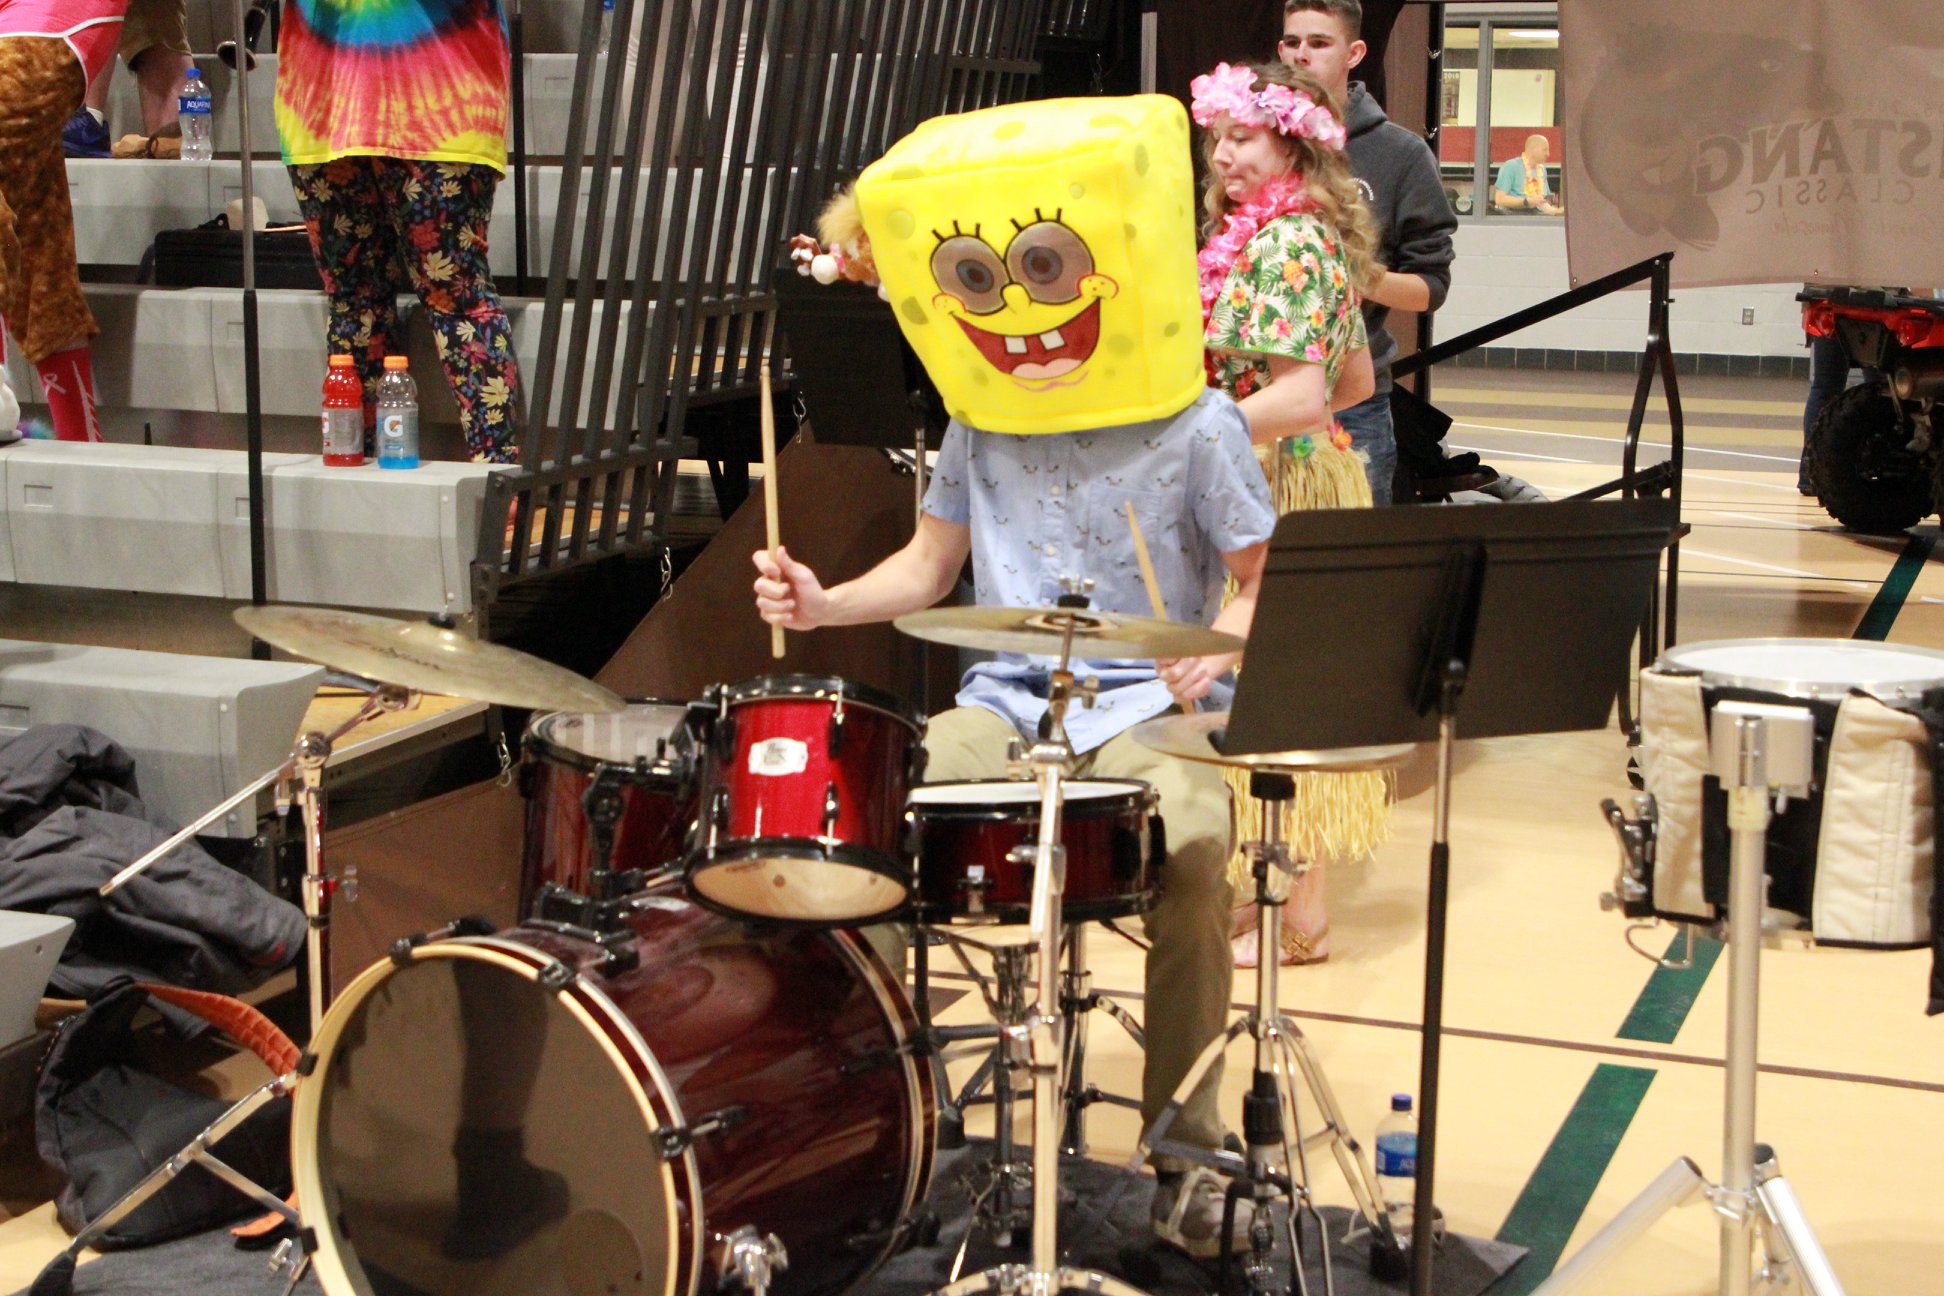 Pep Band drummer in Sponge Bob mask